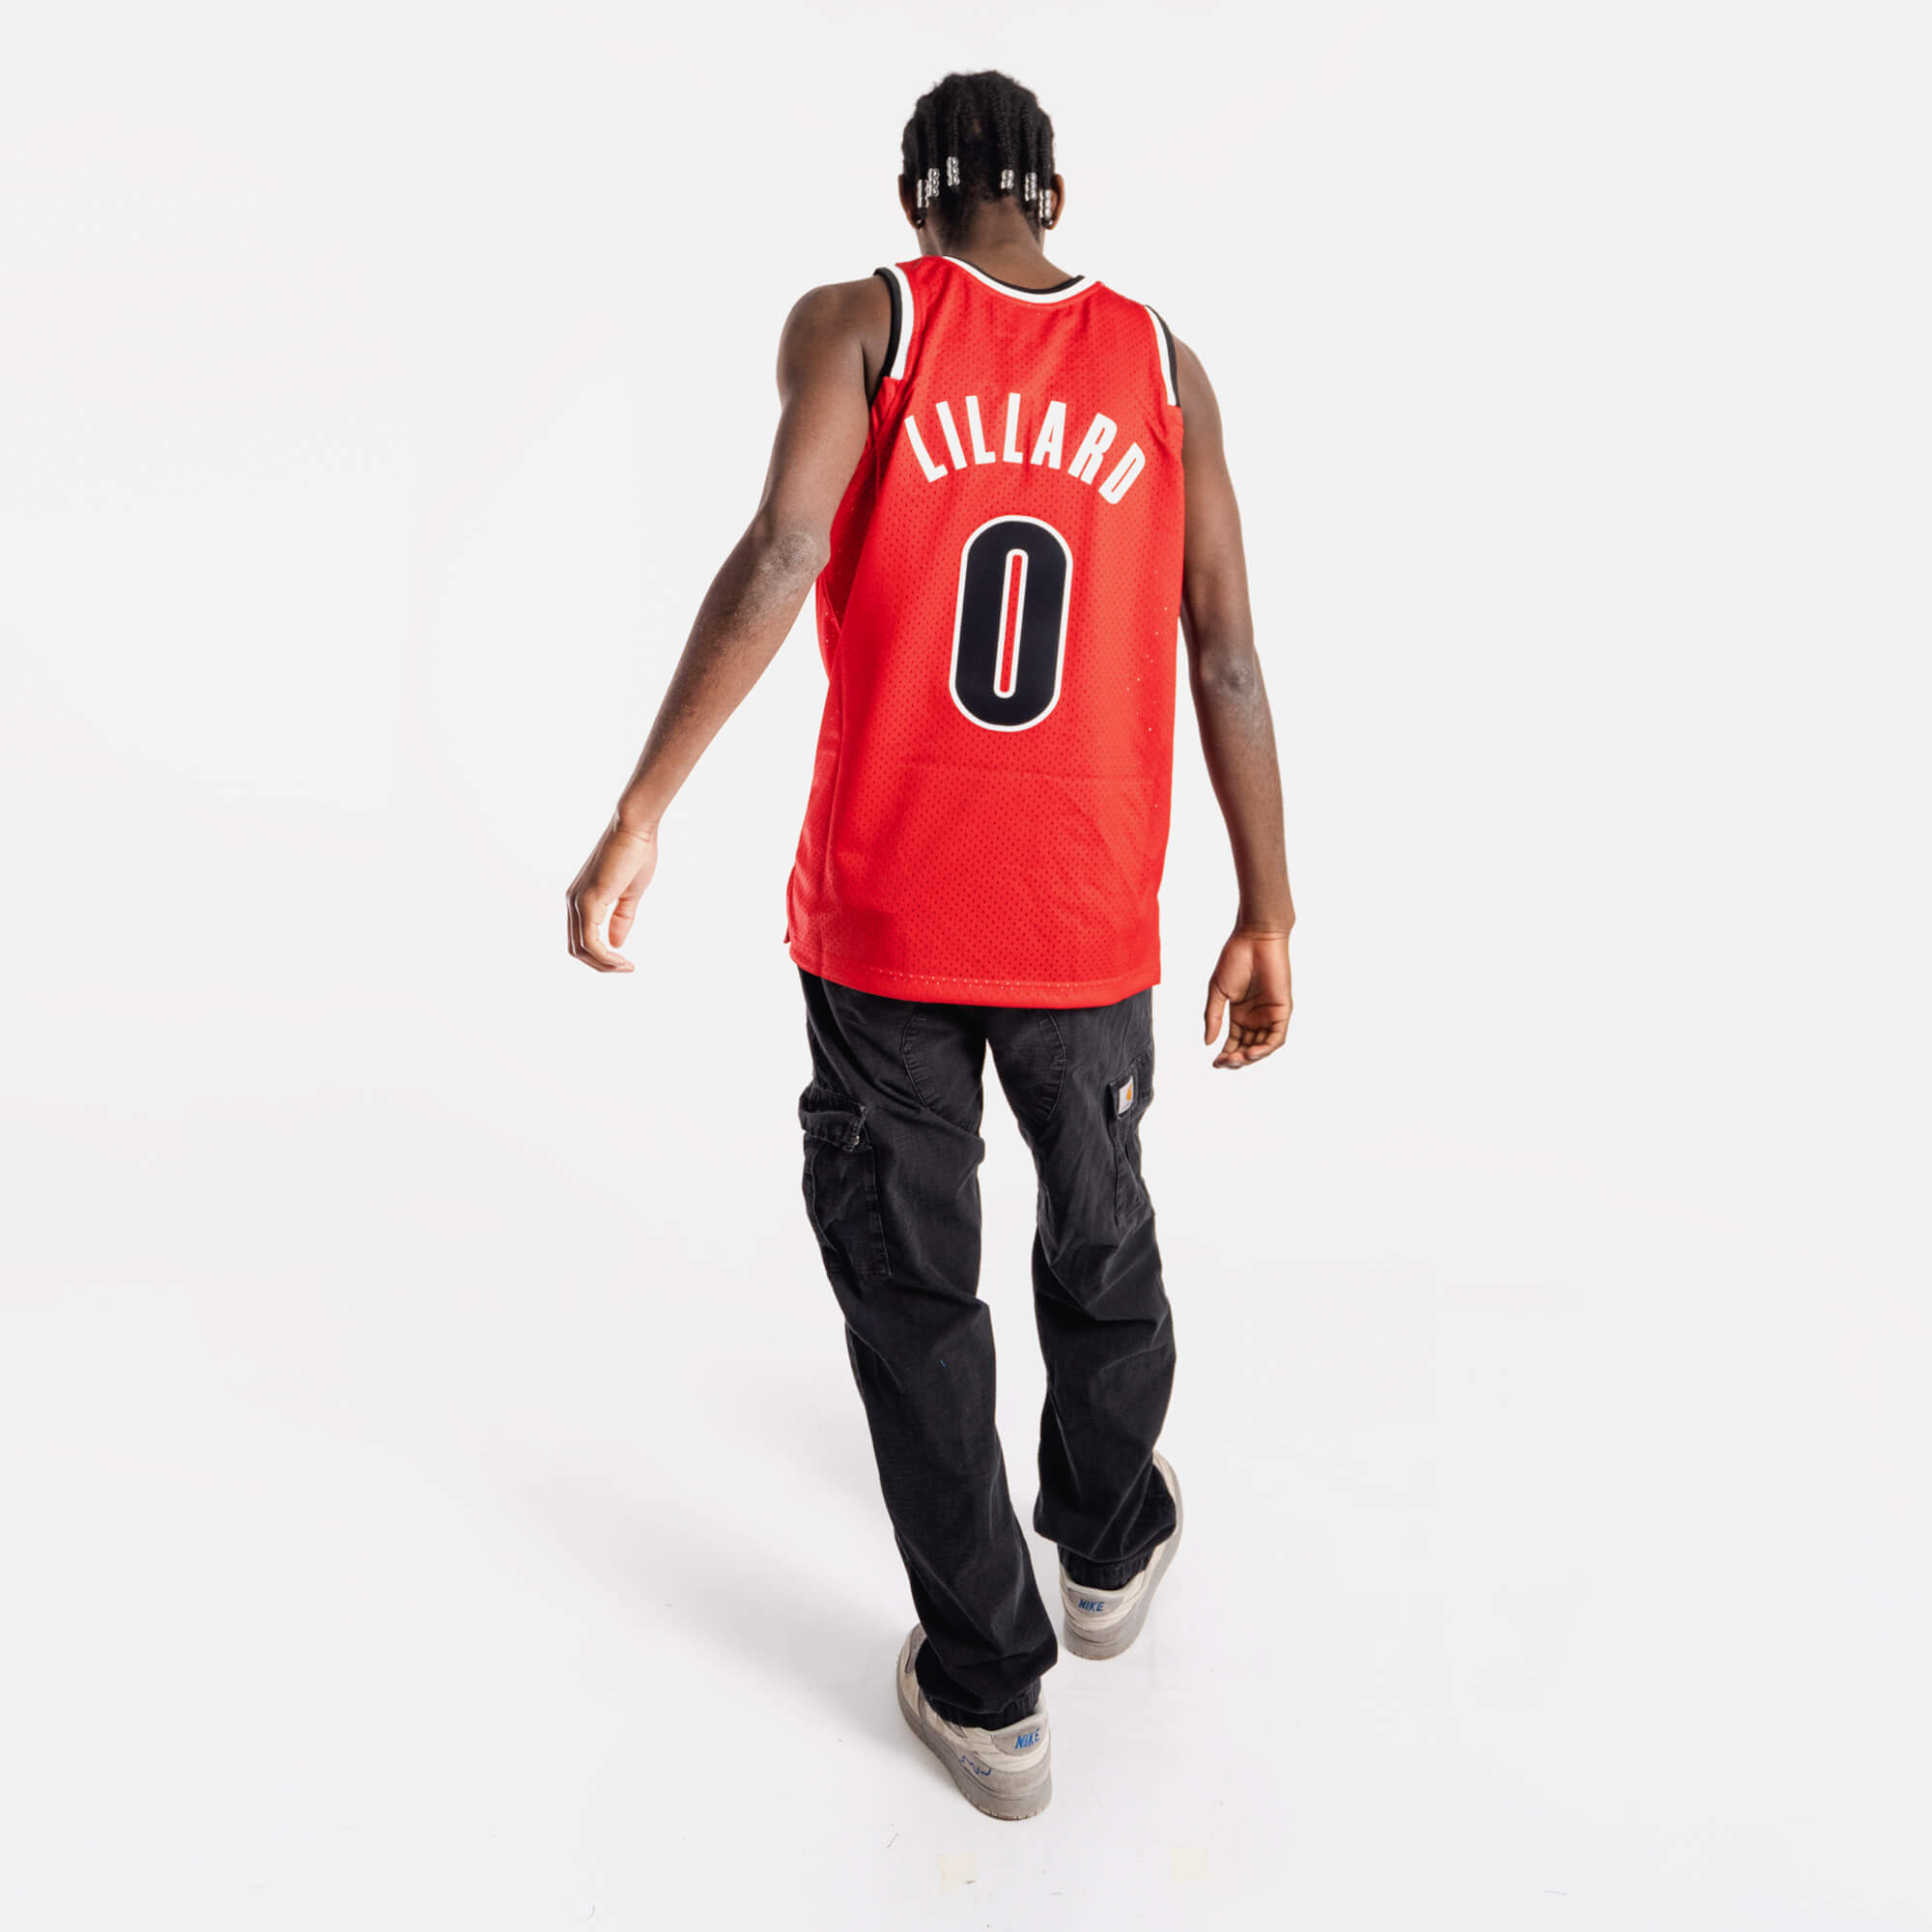 NBA Portland Trail Blazers Damian Lillard #0 Men’s Replica Jersey, X-Large,  Red